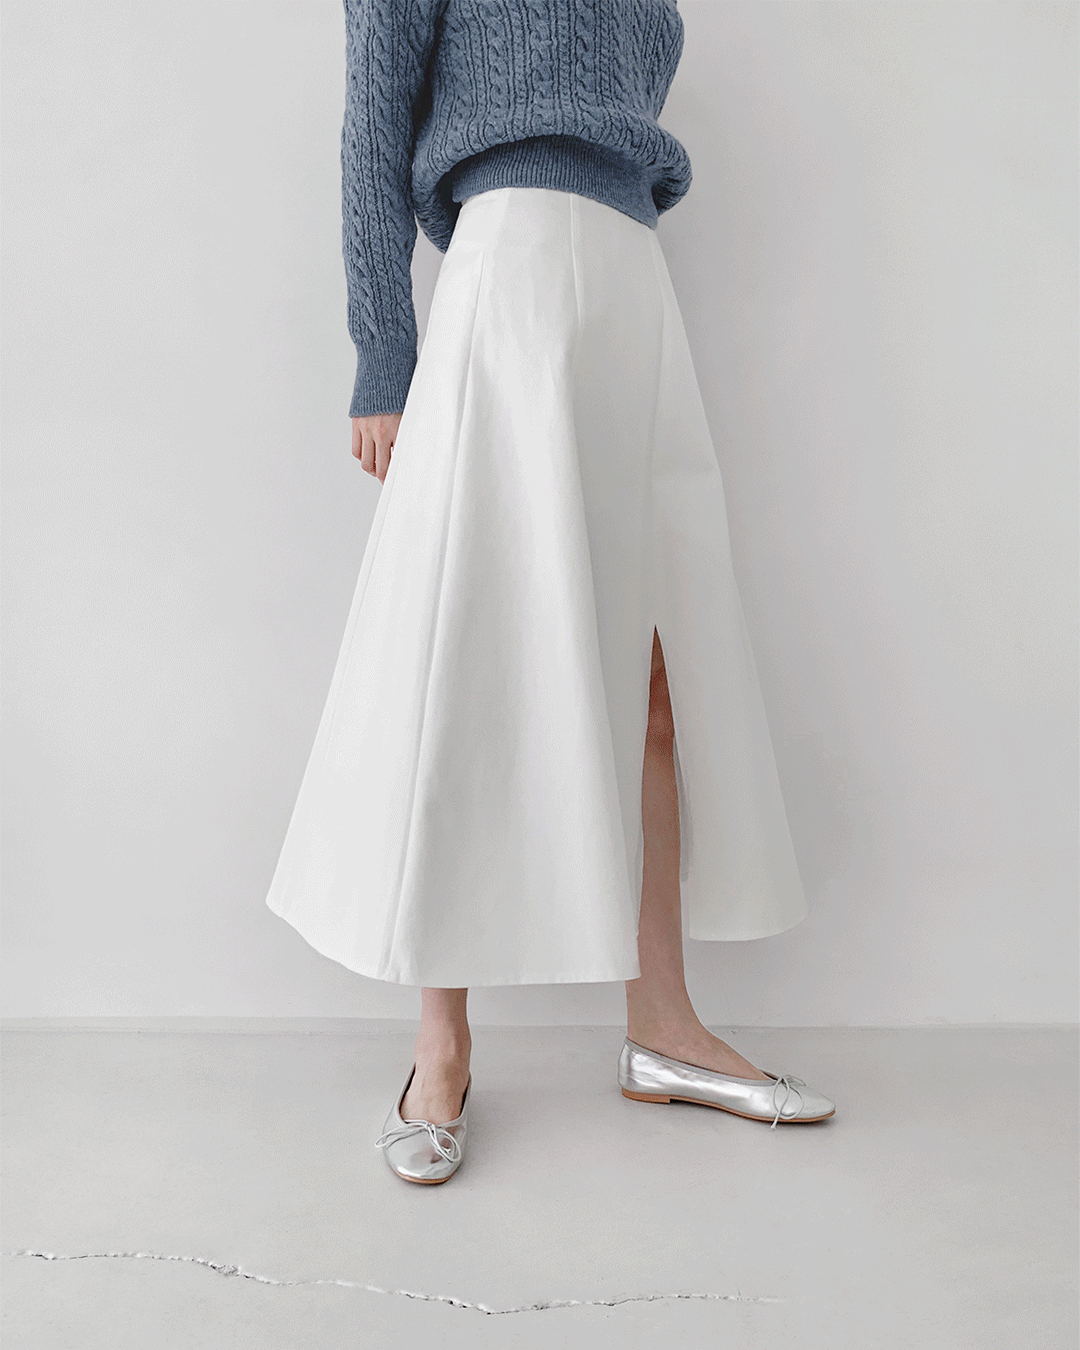 Humming skirt